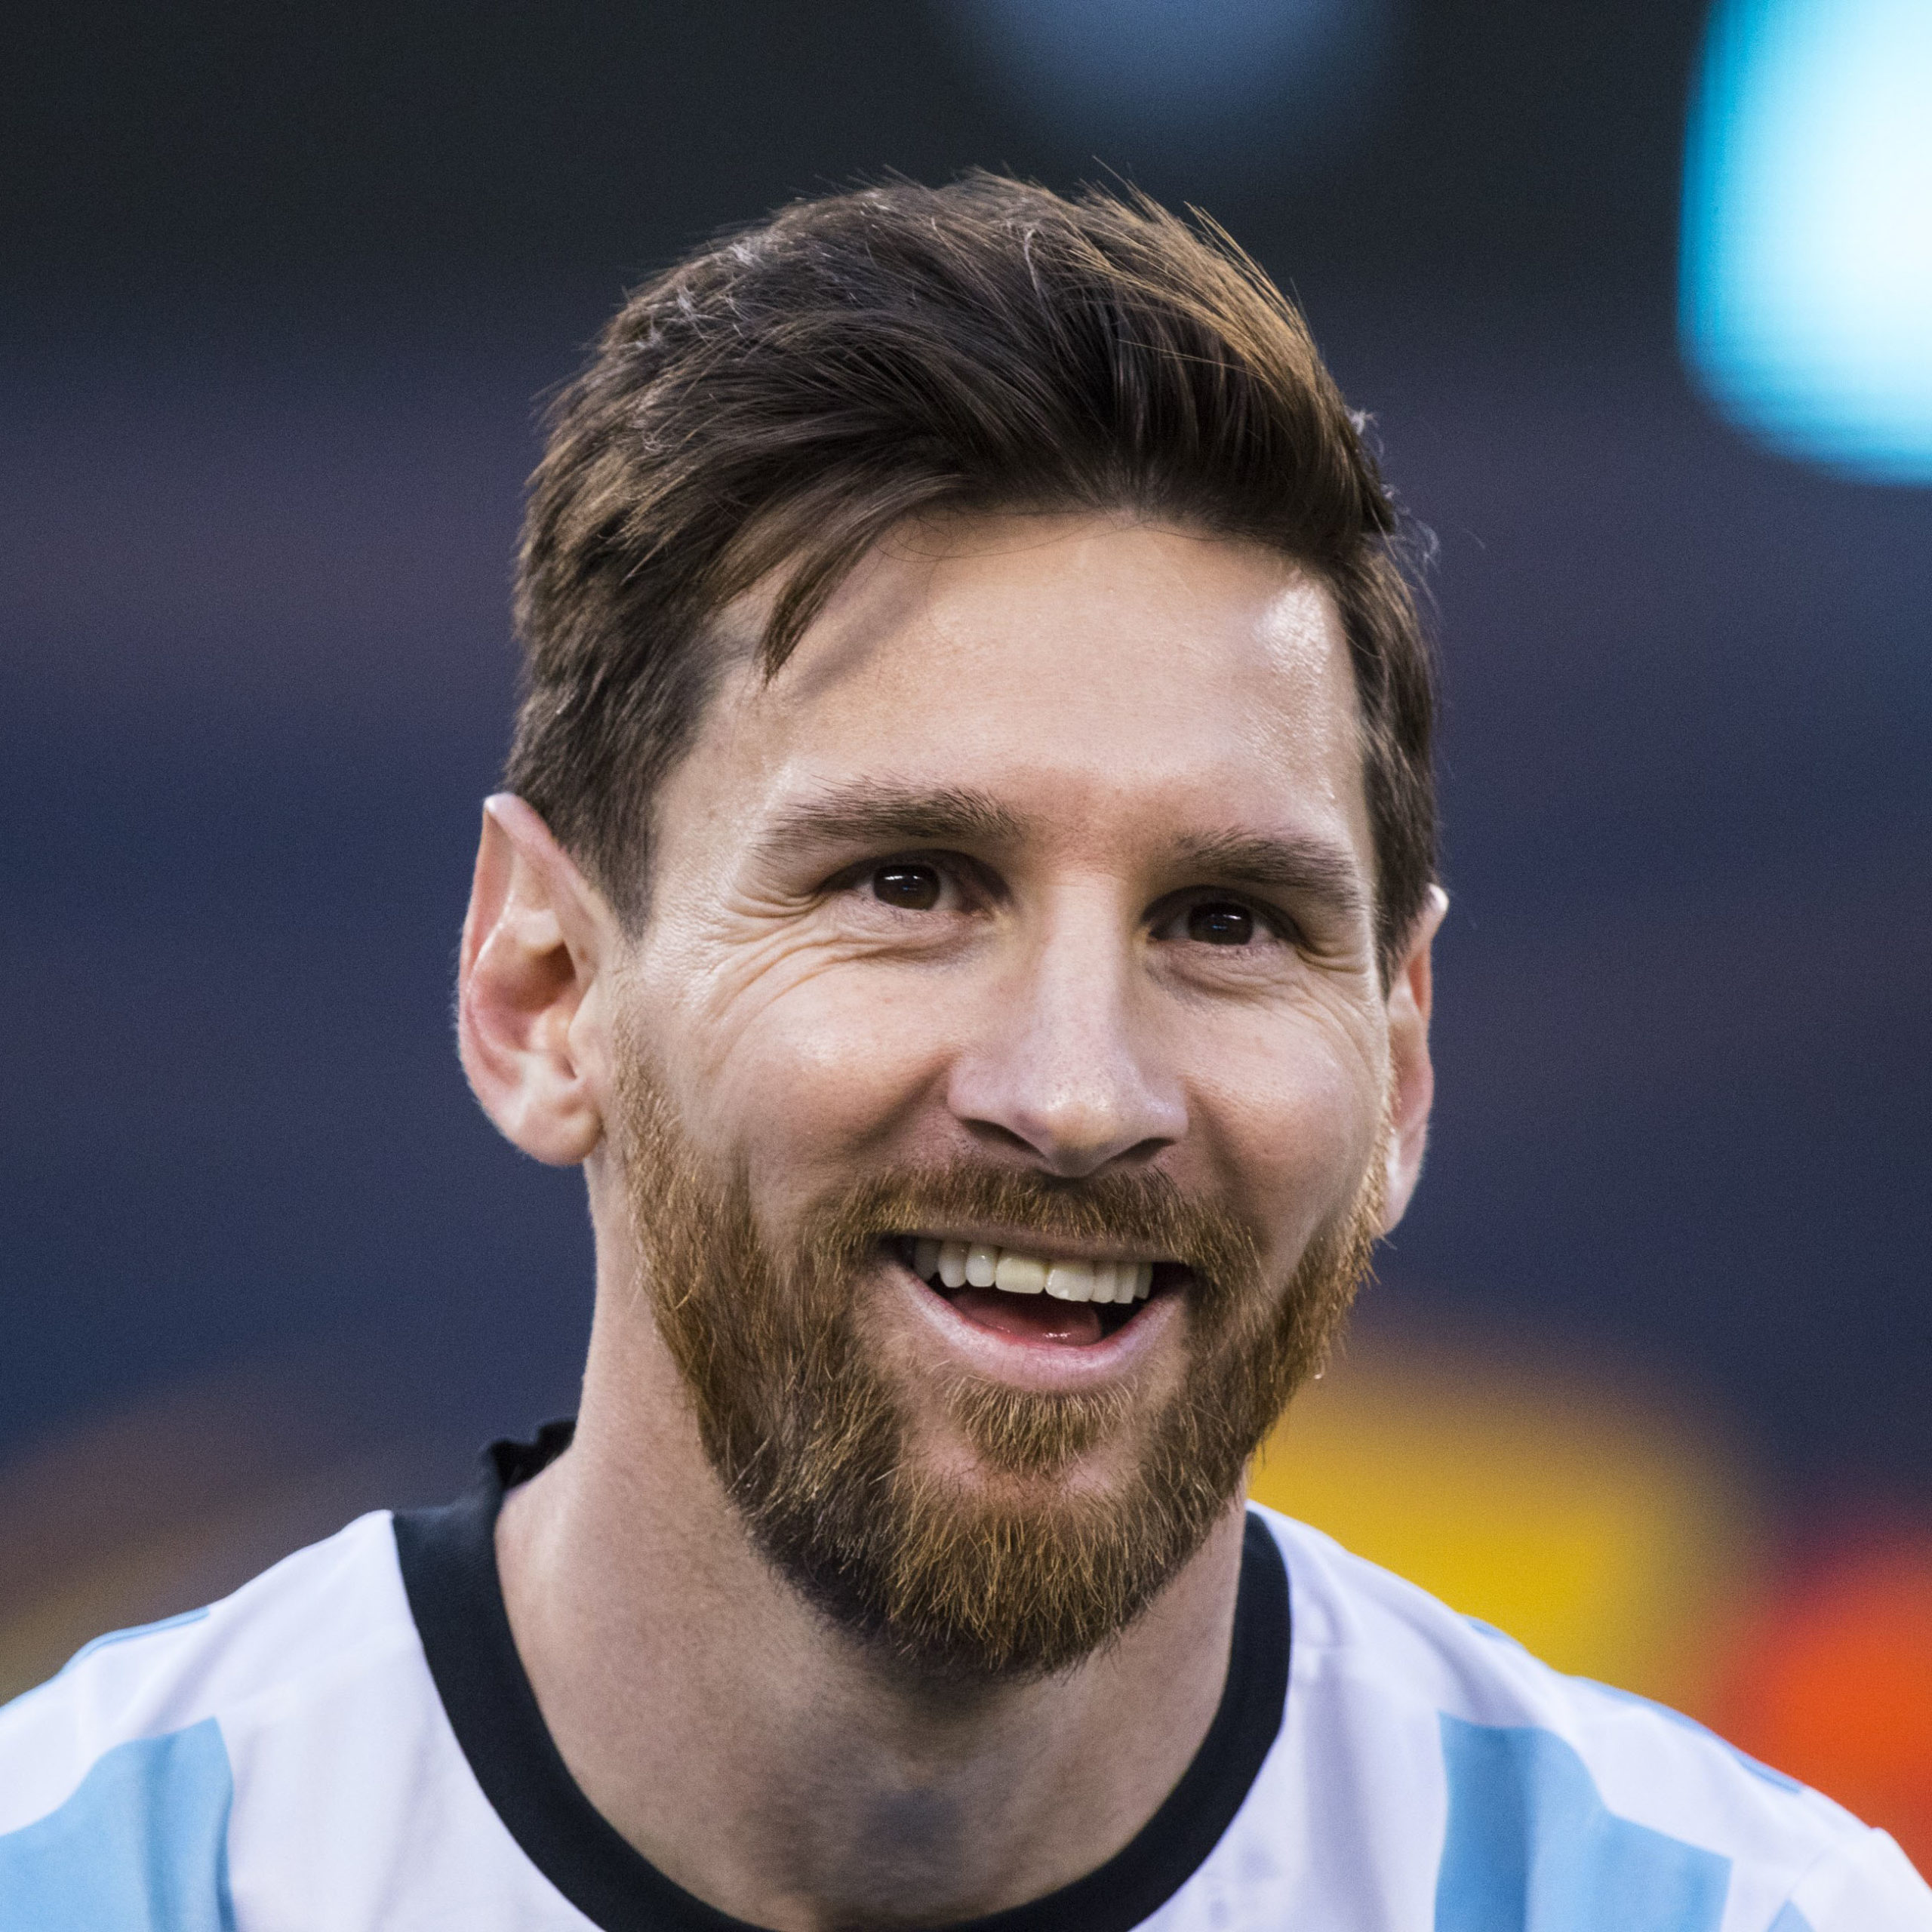 Messi foto actual 2018